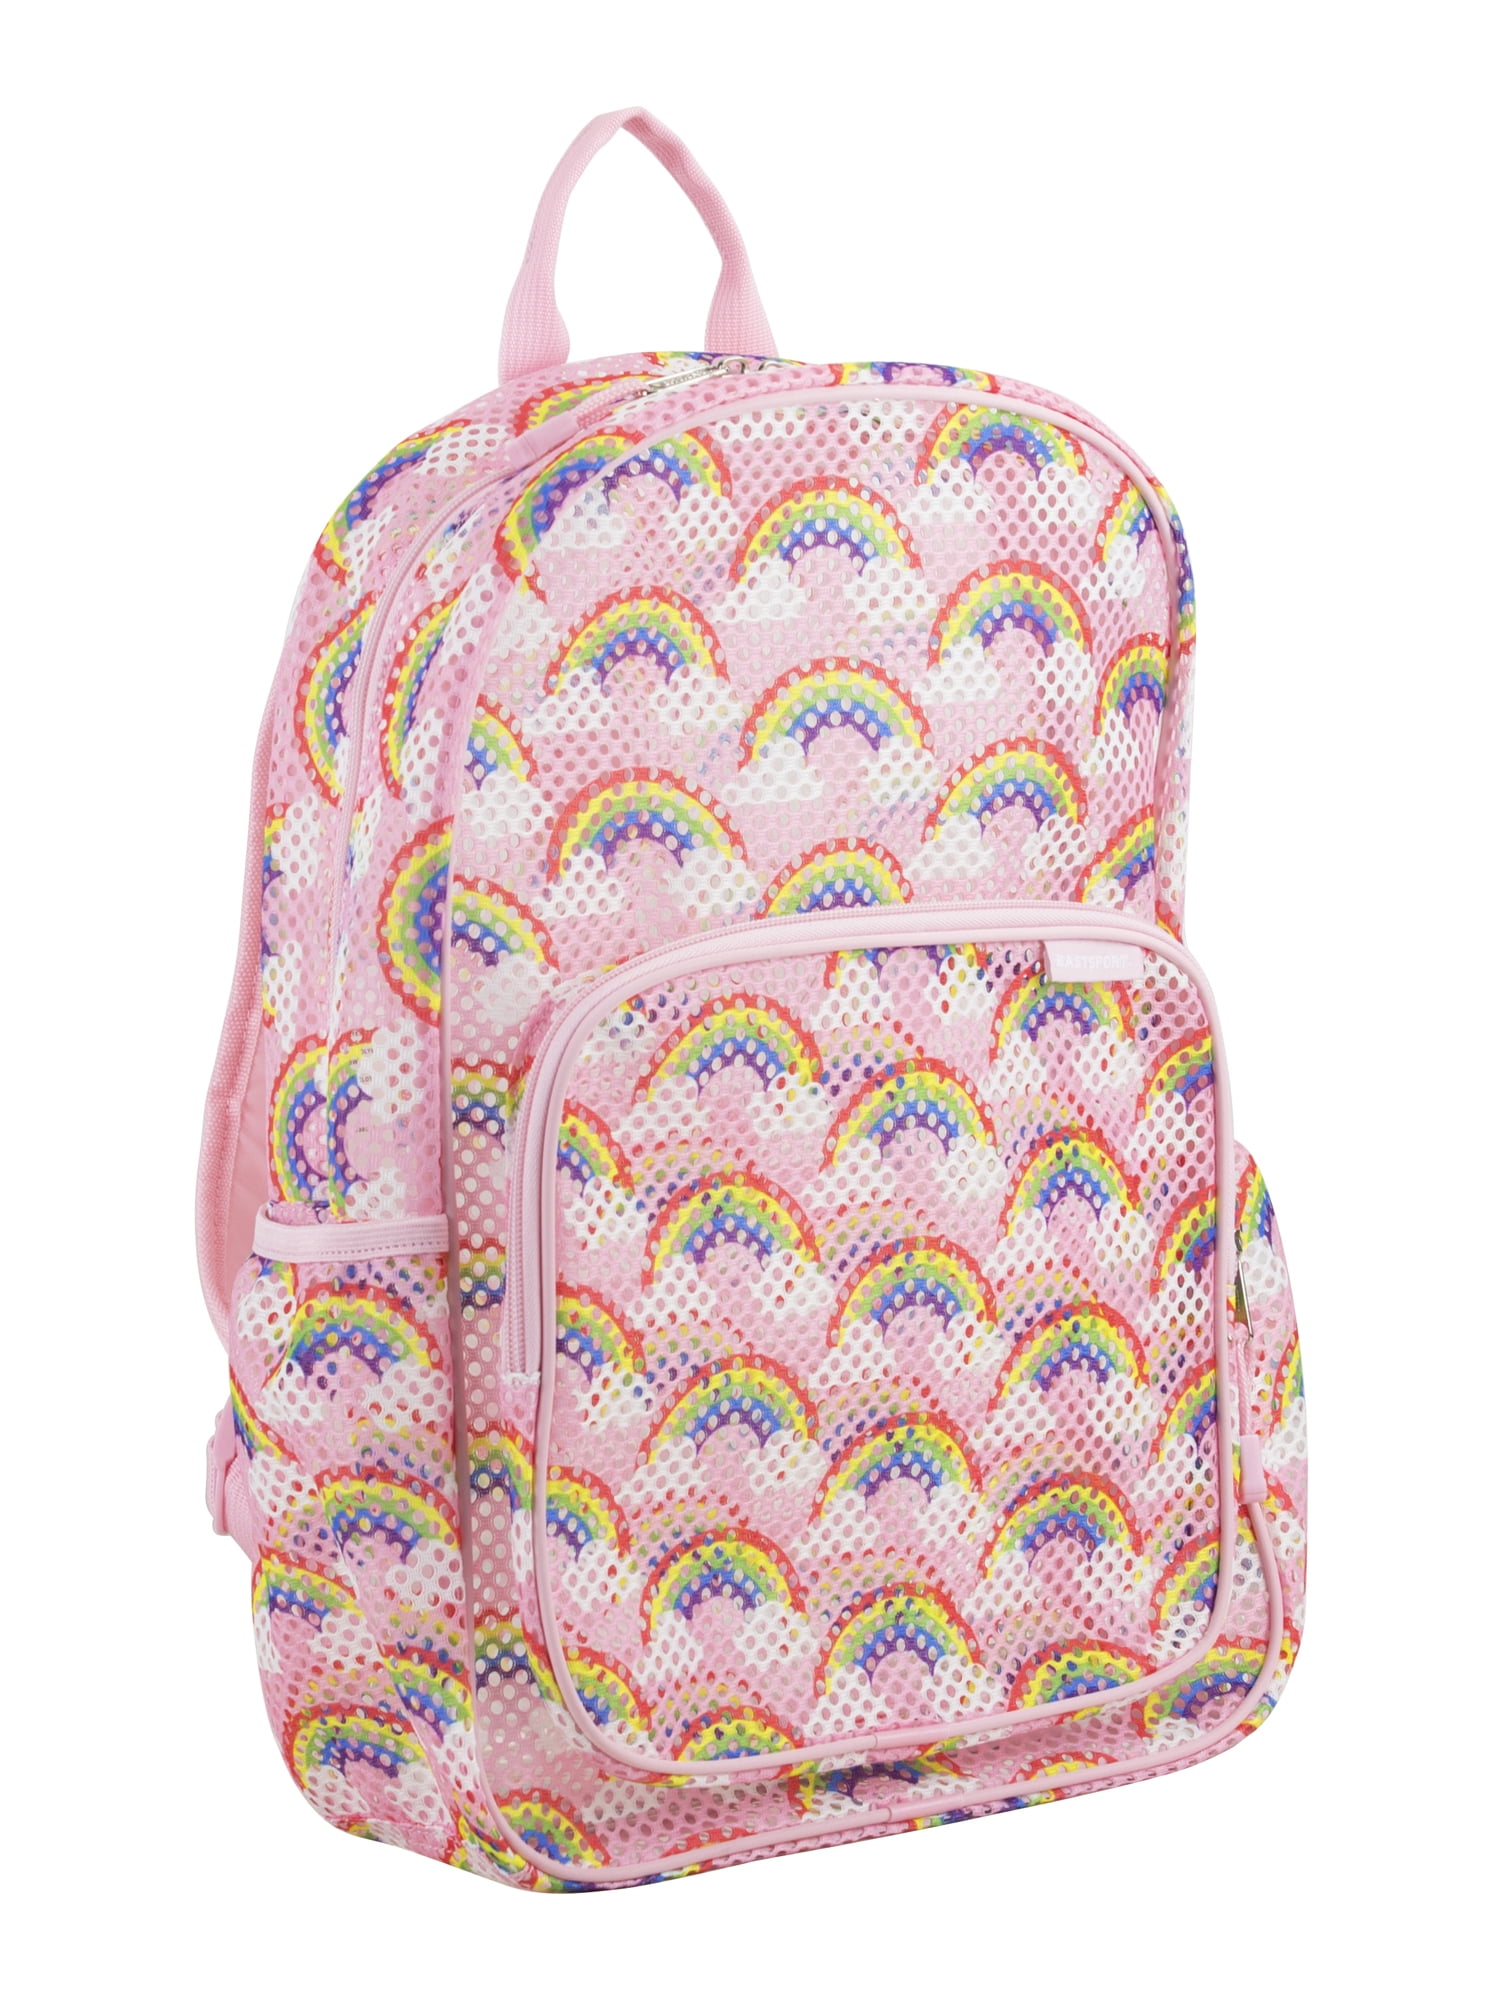 Rainbow Backpack School Bag Glitter Print Minimalist 